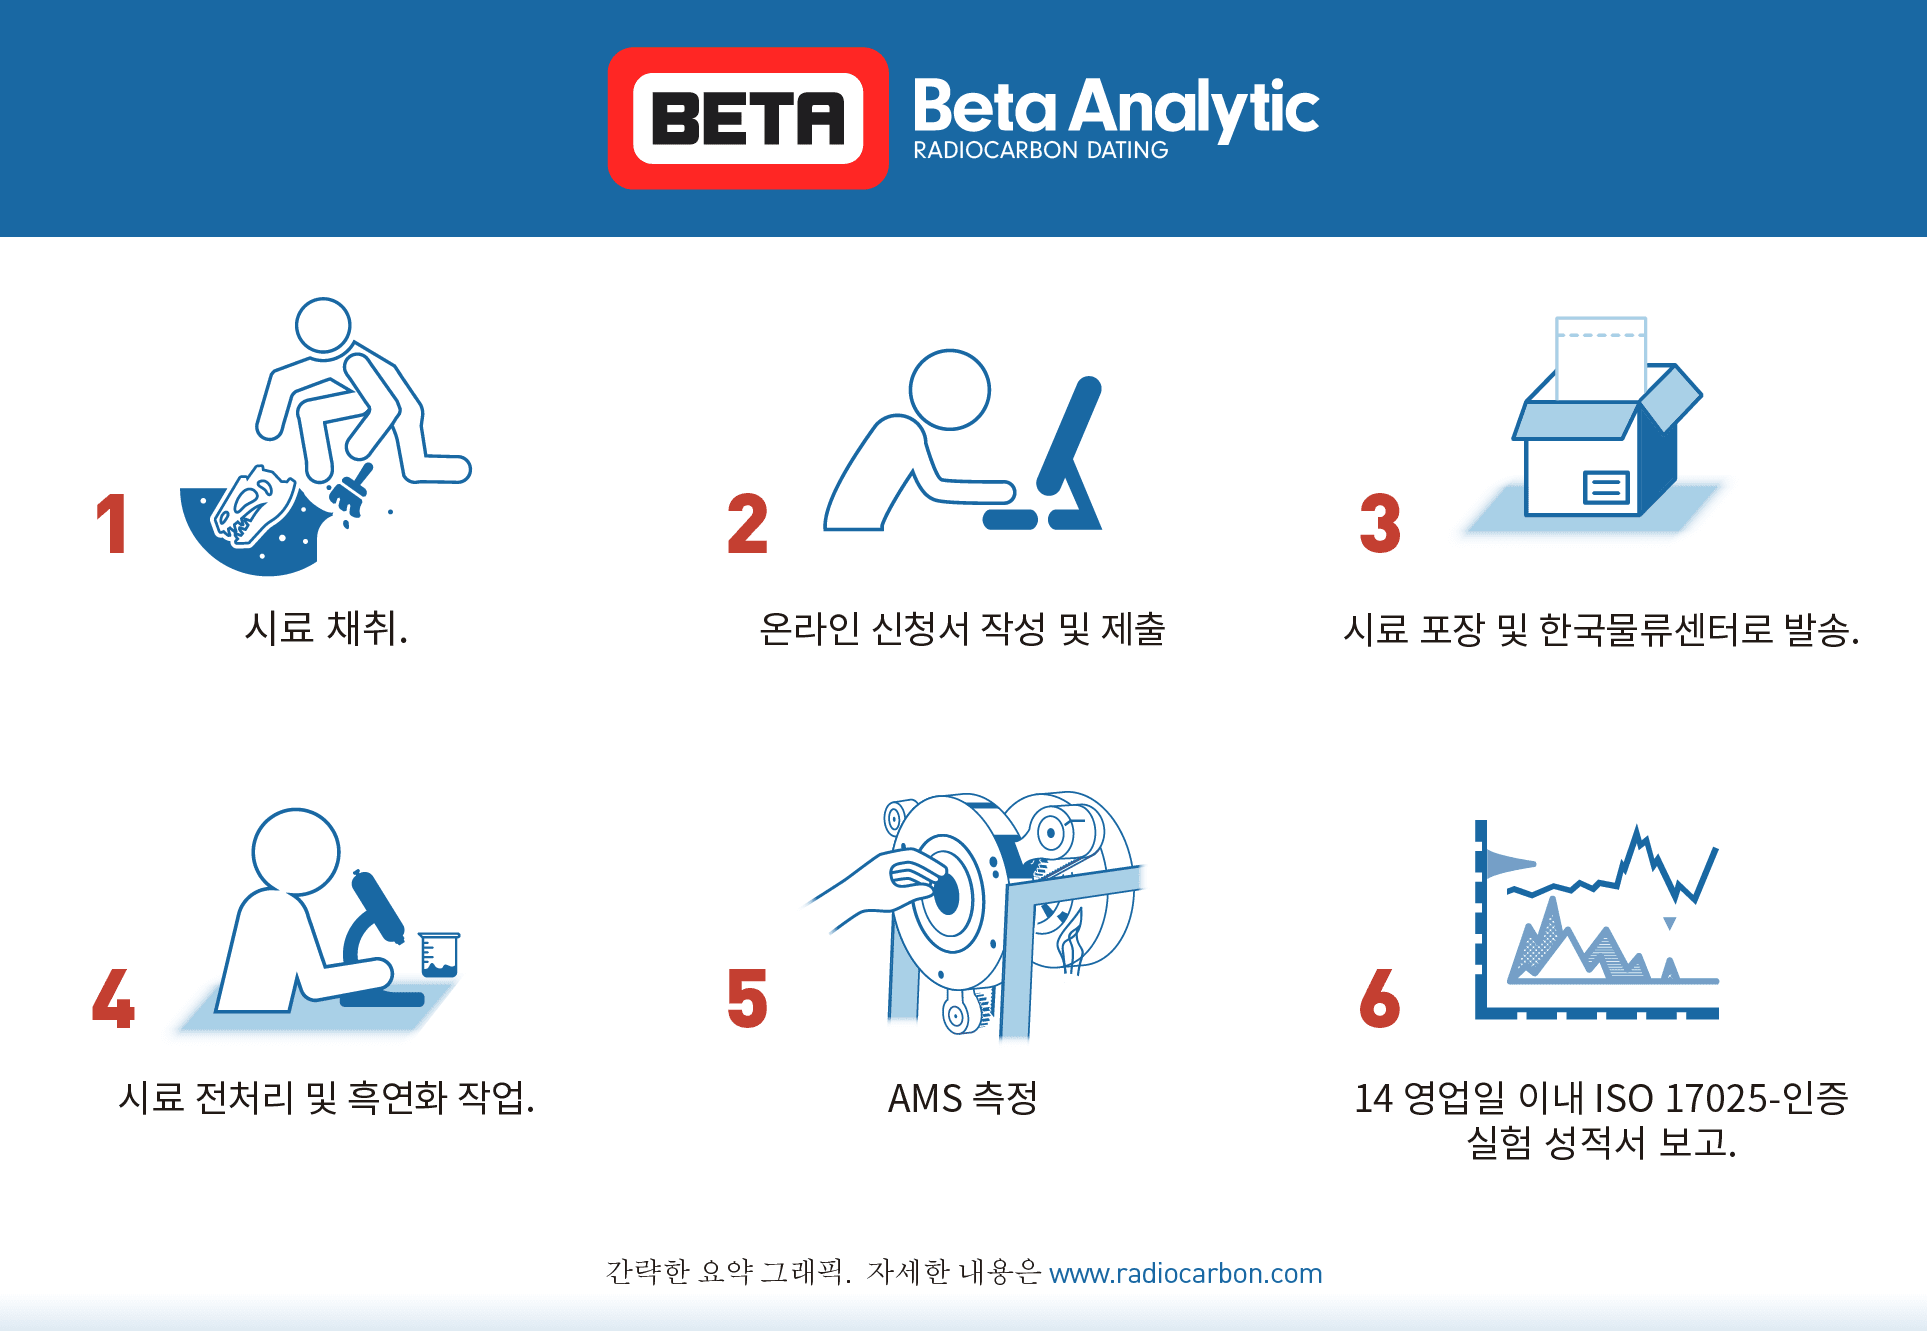 Beta Analytic Radiocarbon Dating Samples Korean